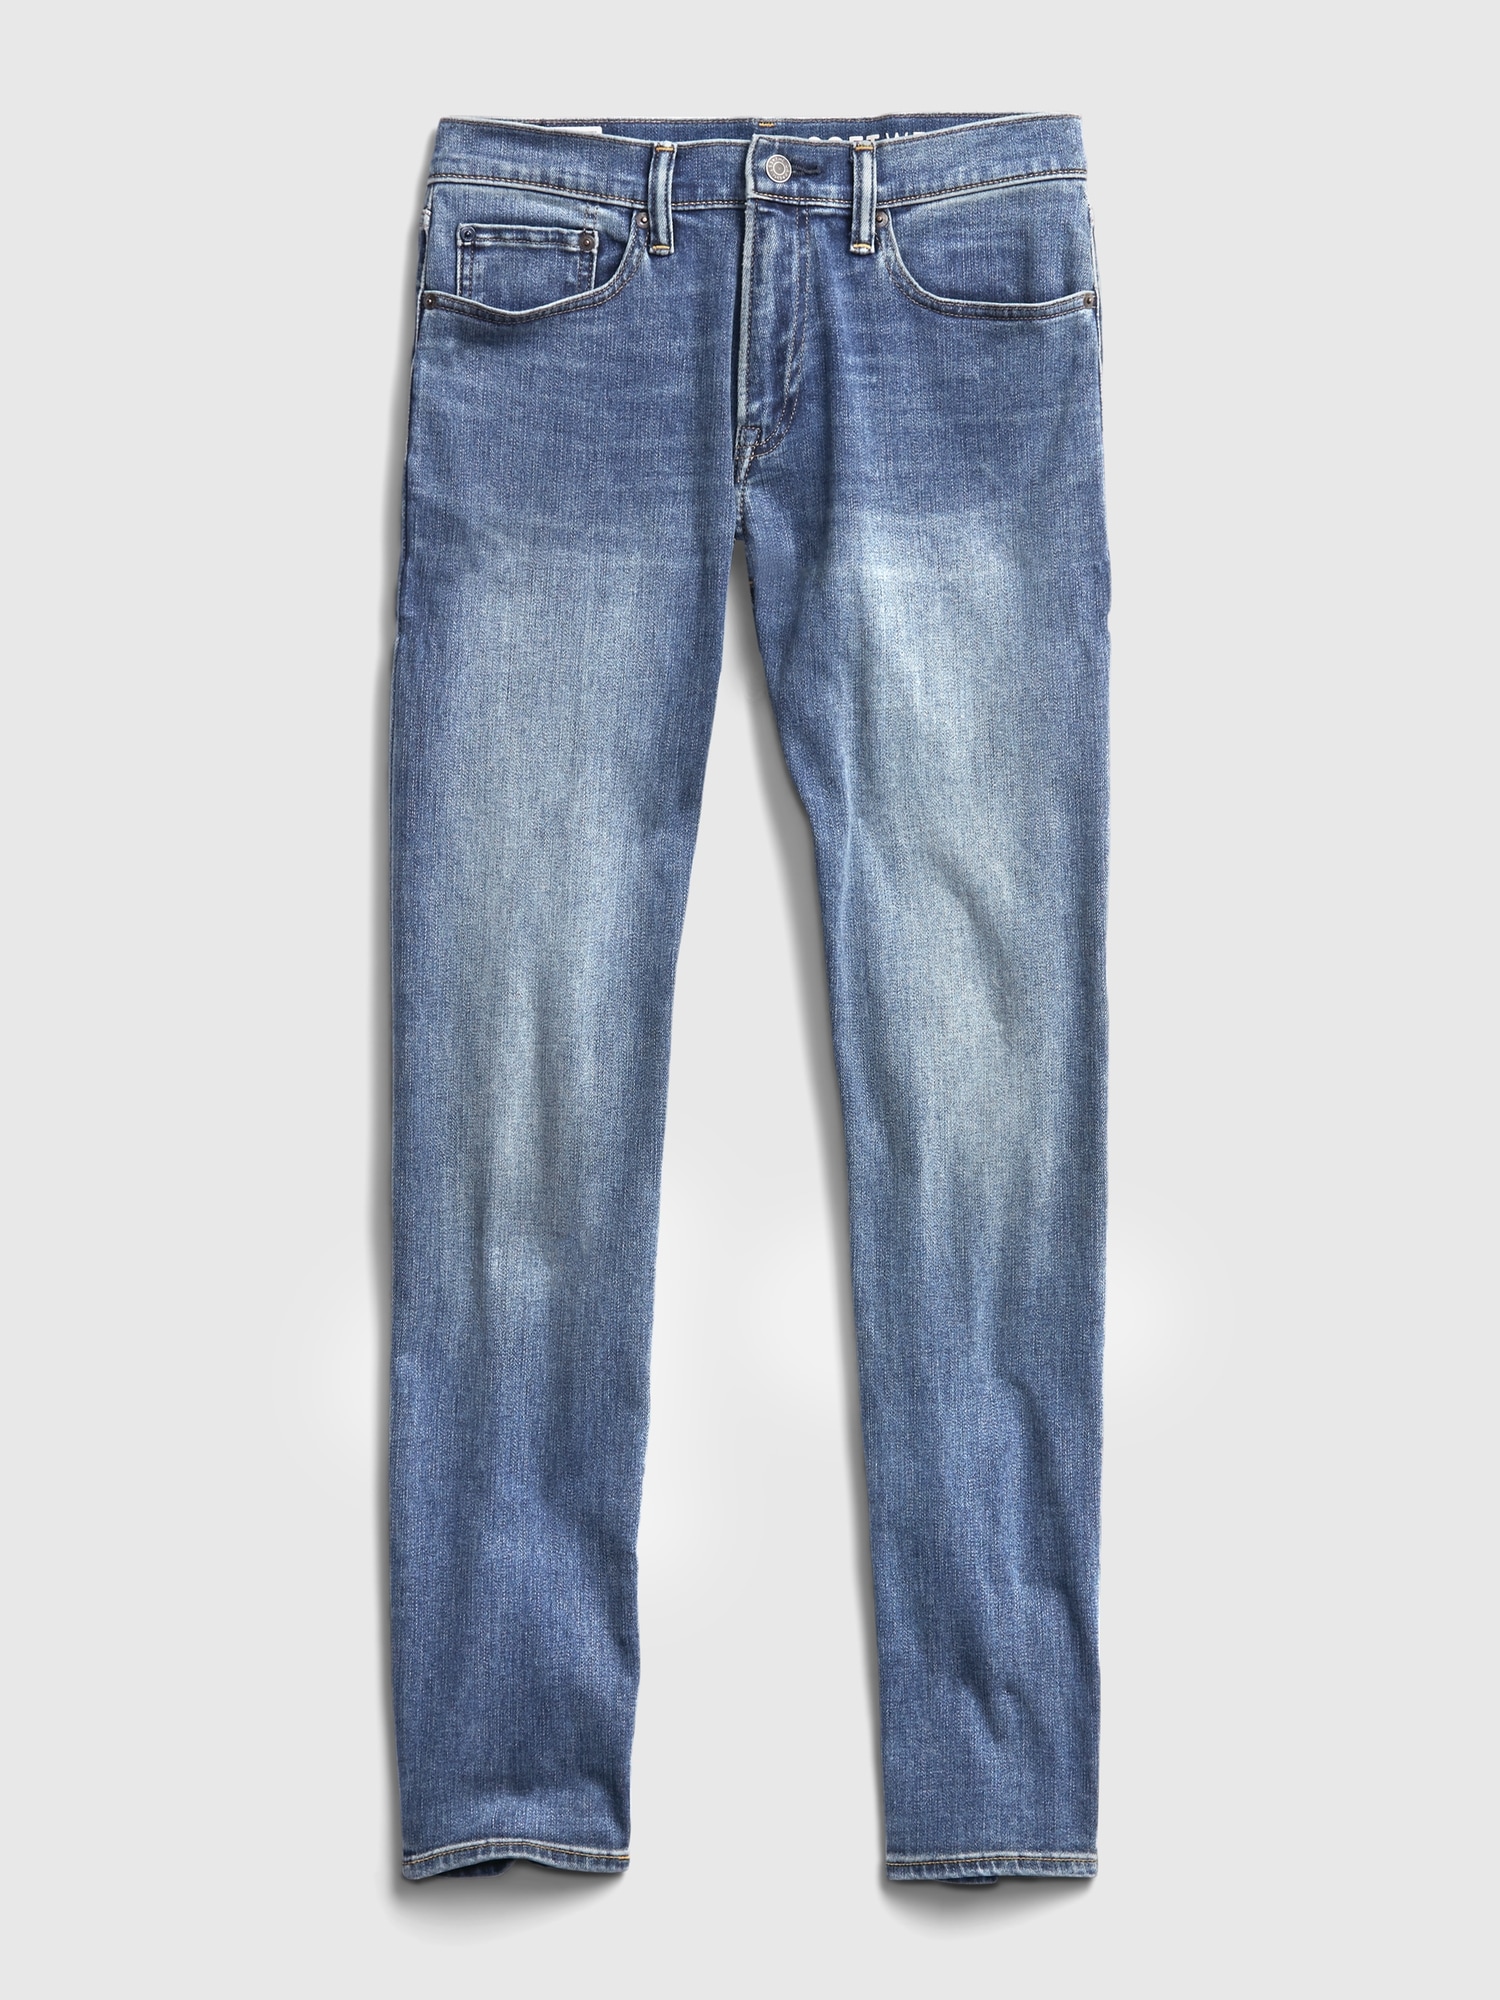 GAP Men's Soft Wear Stretch Slim Fit Denim Jeans, Midnight Wash, 30W x 32L  : : Fashion